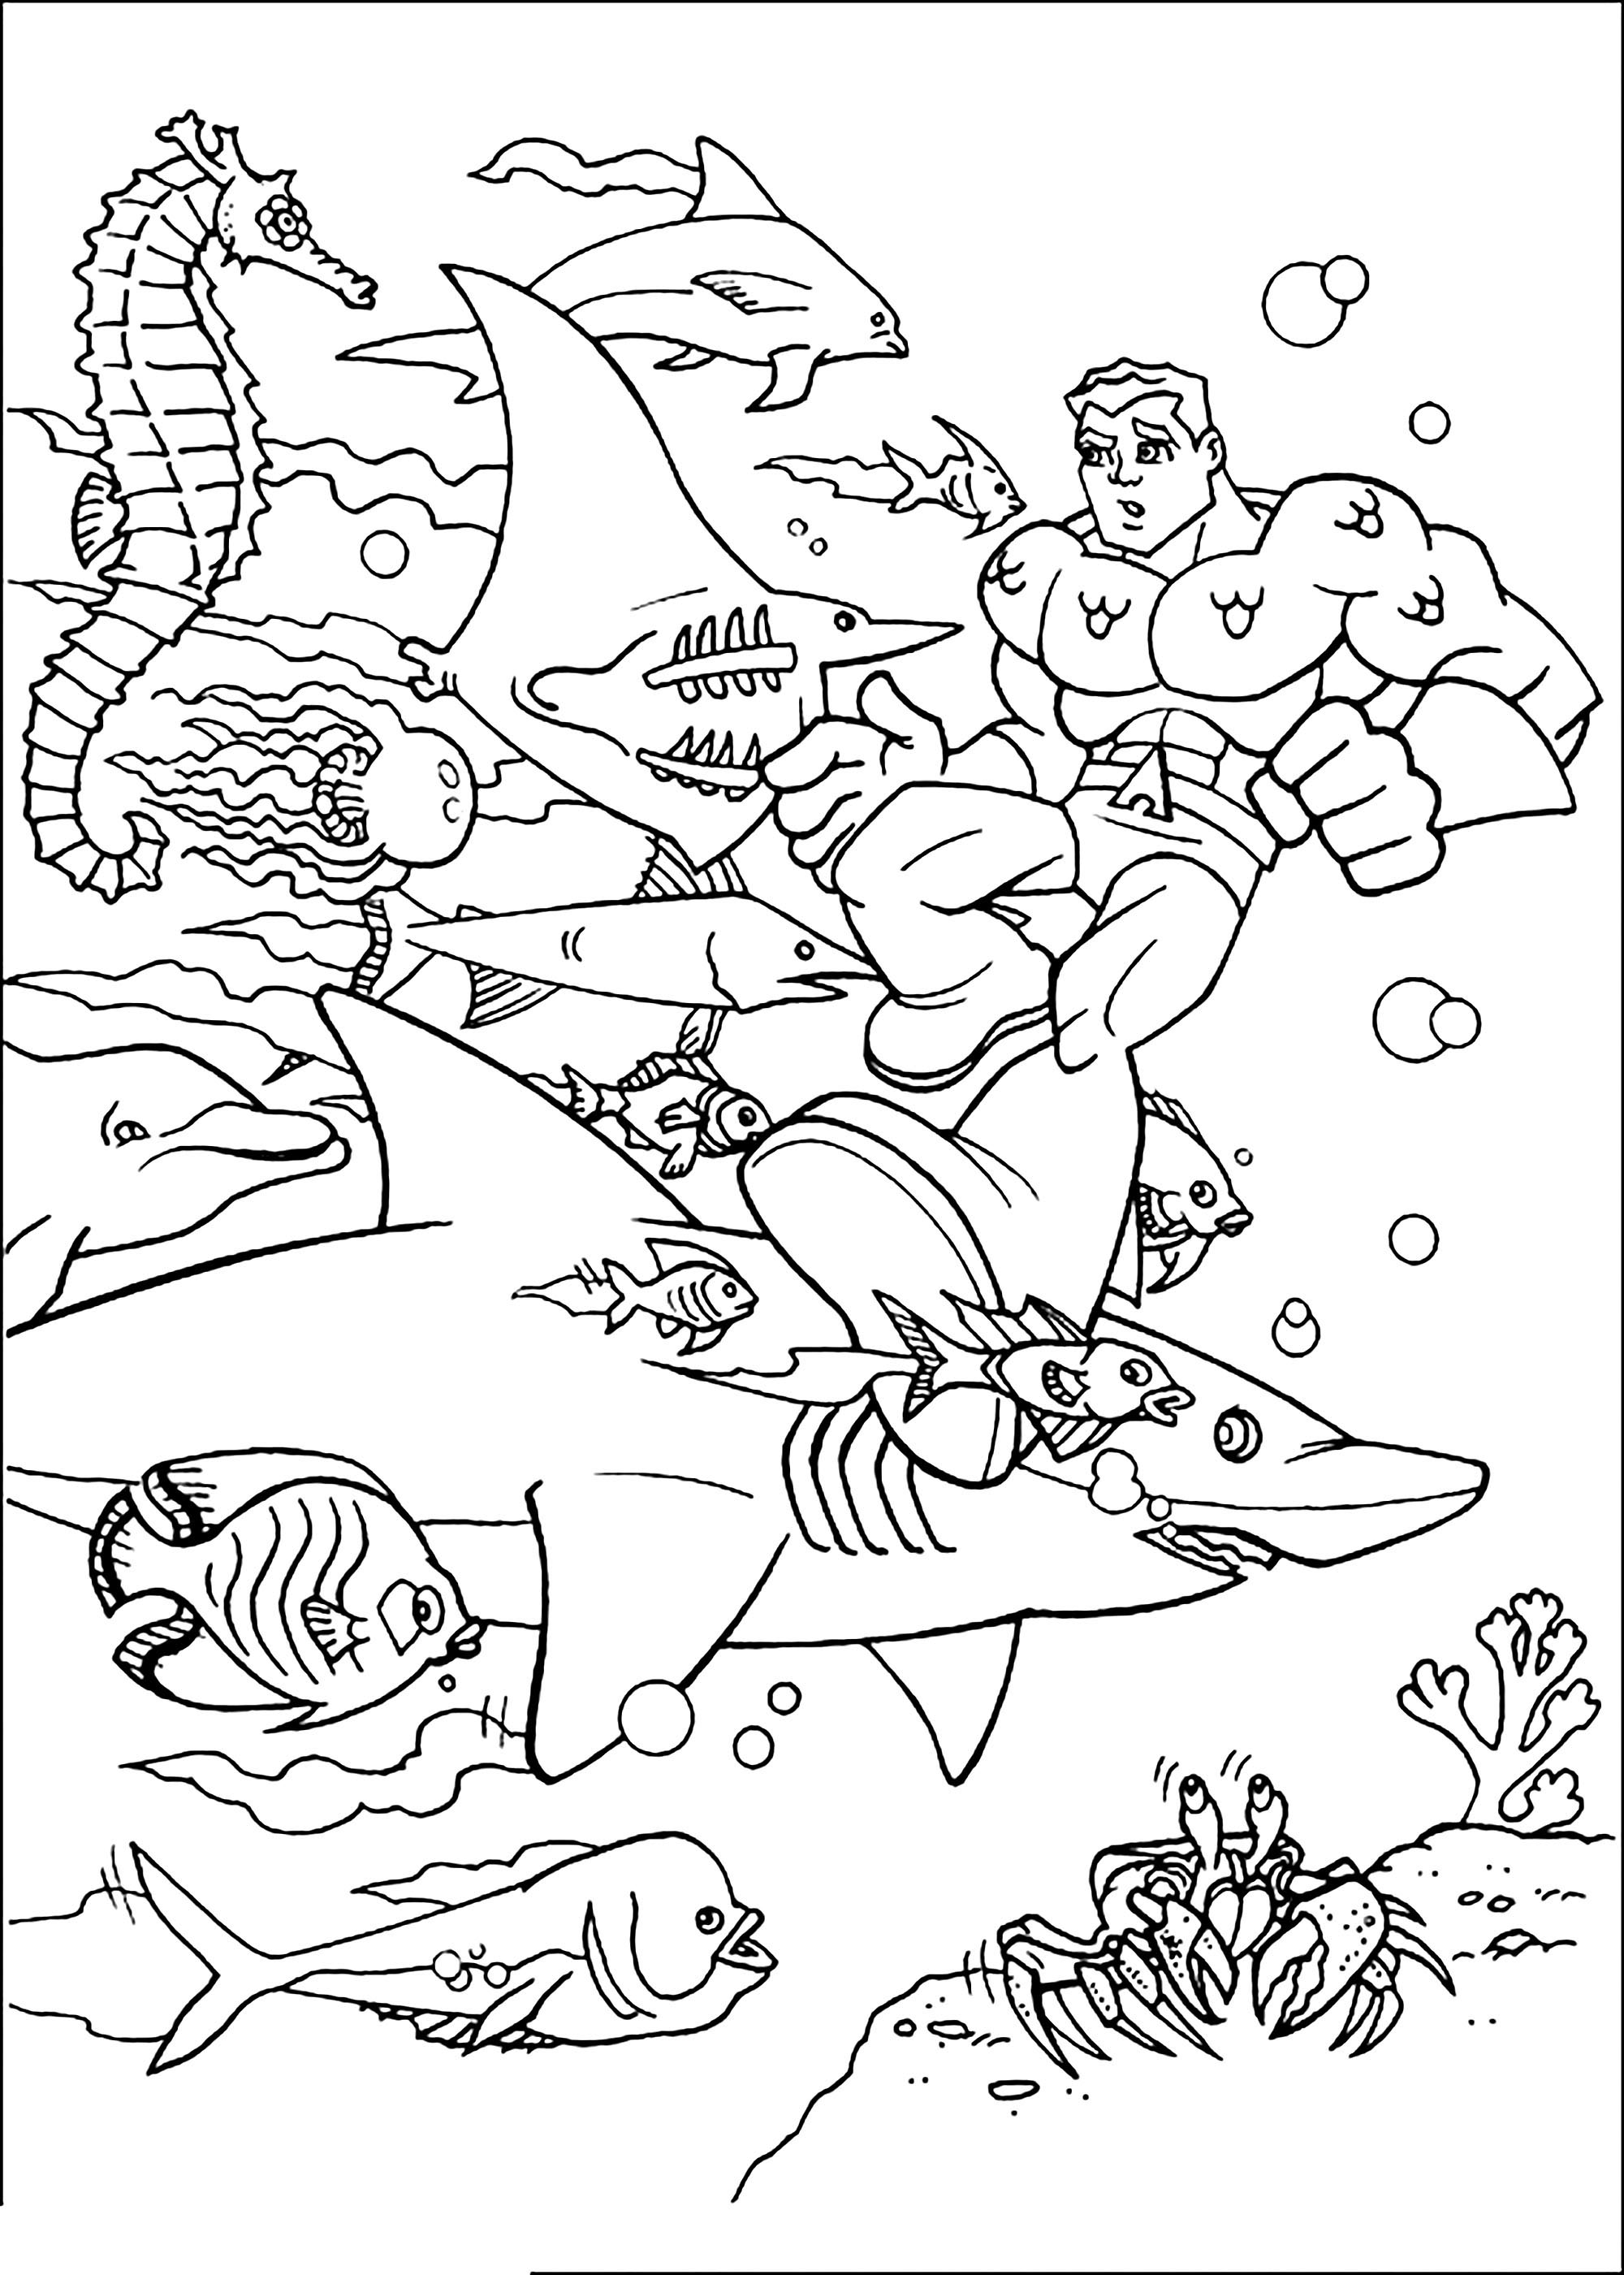 Dibujos para colorear de Aquaman para imprimir